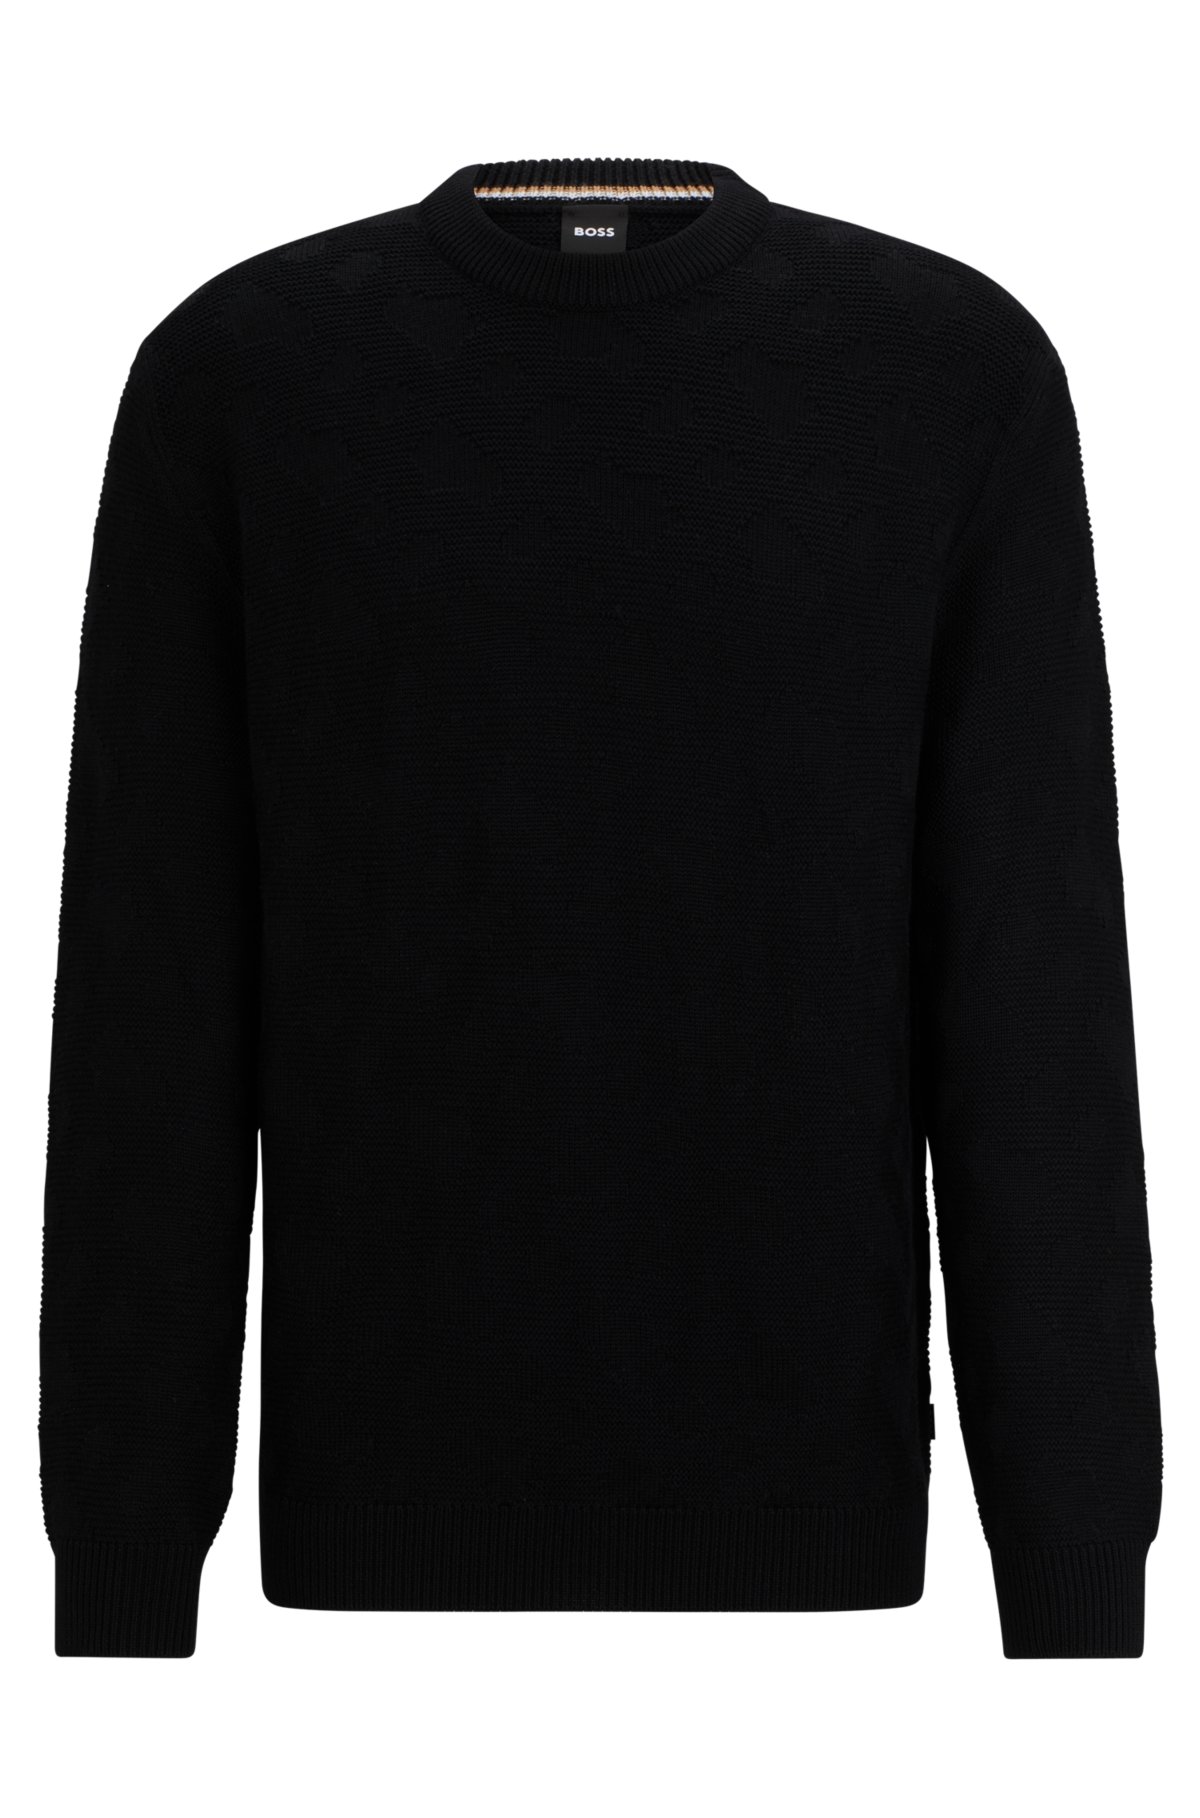 Monogram-structured sweater in virgin wool, Black